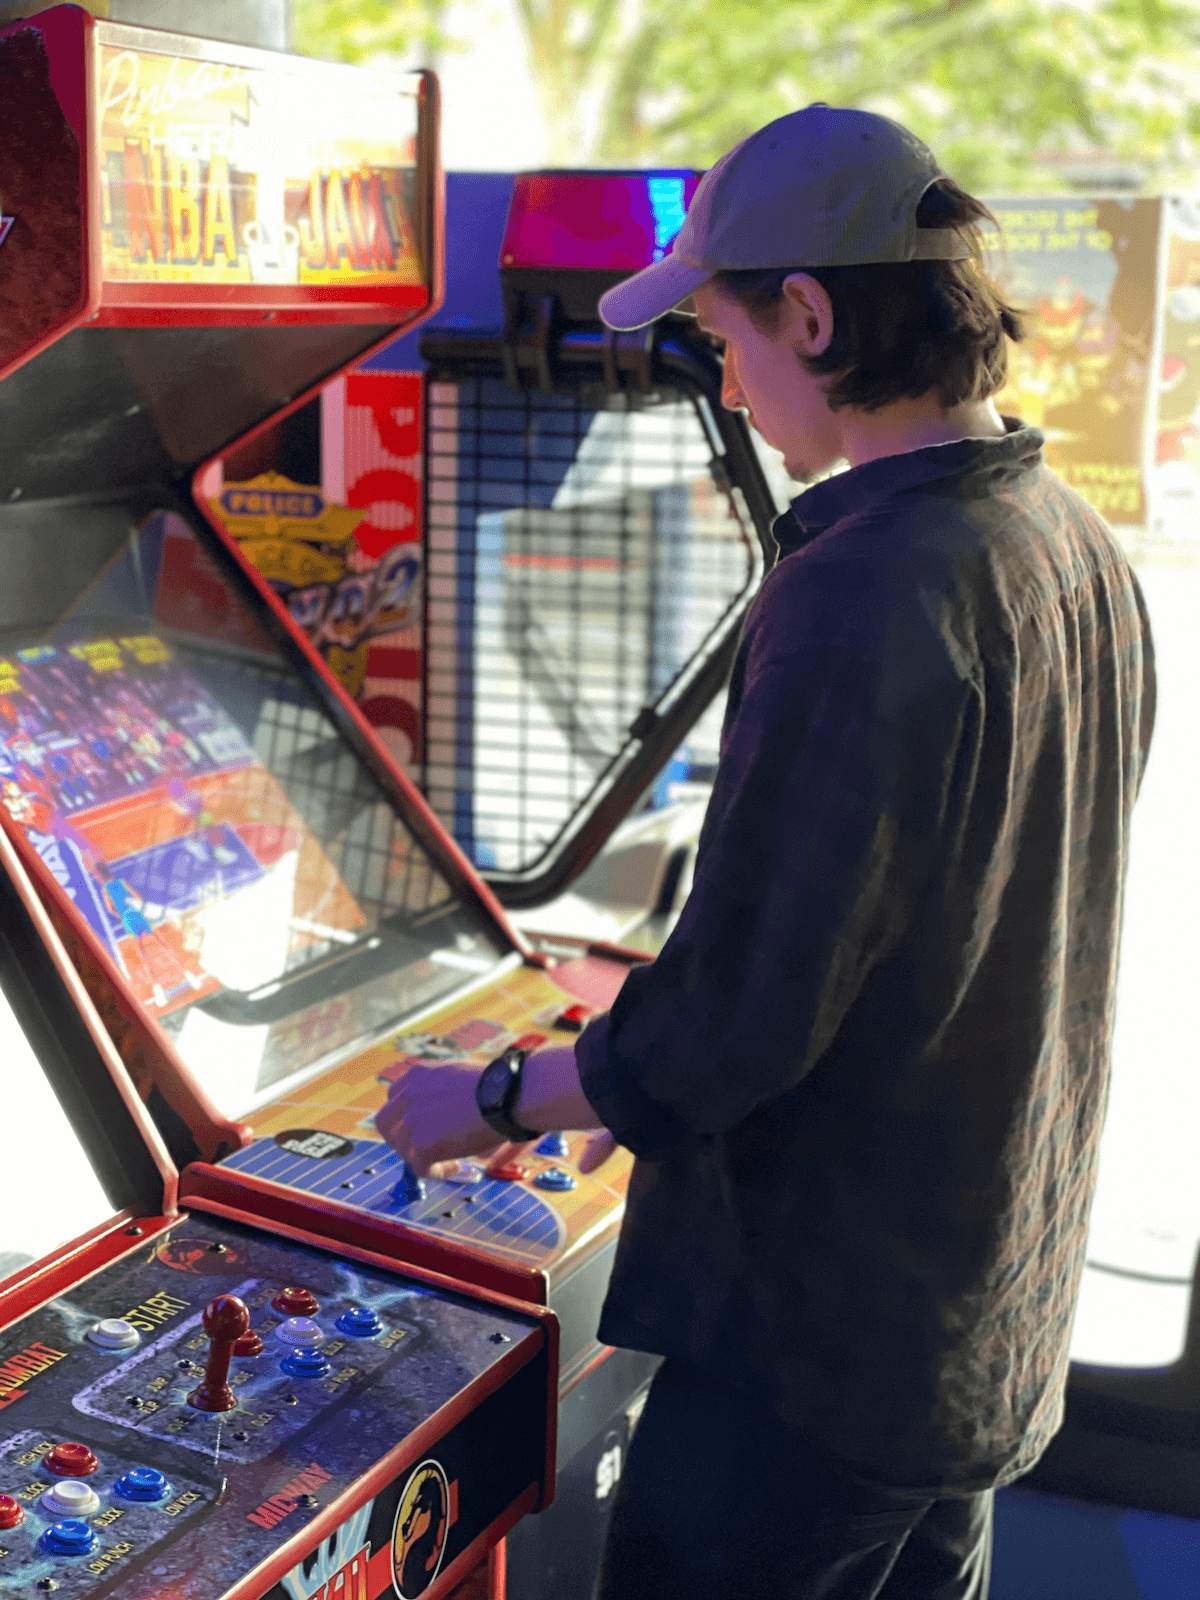 A photo of Alex Rapley playing NBA Jam on an arcade machine